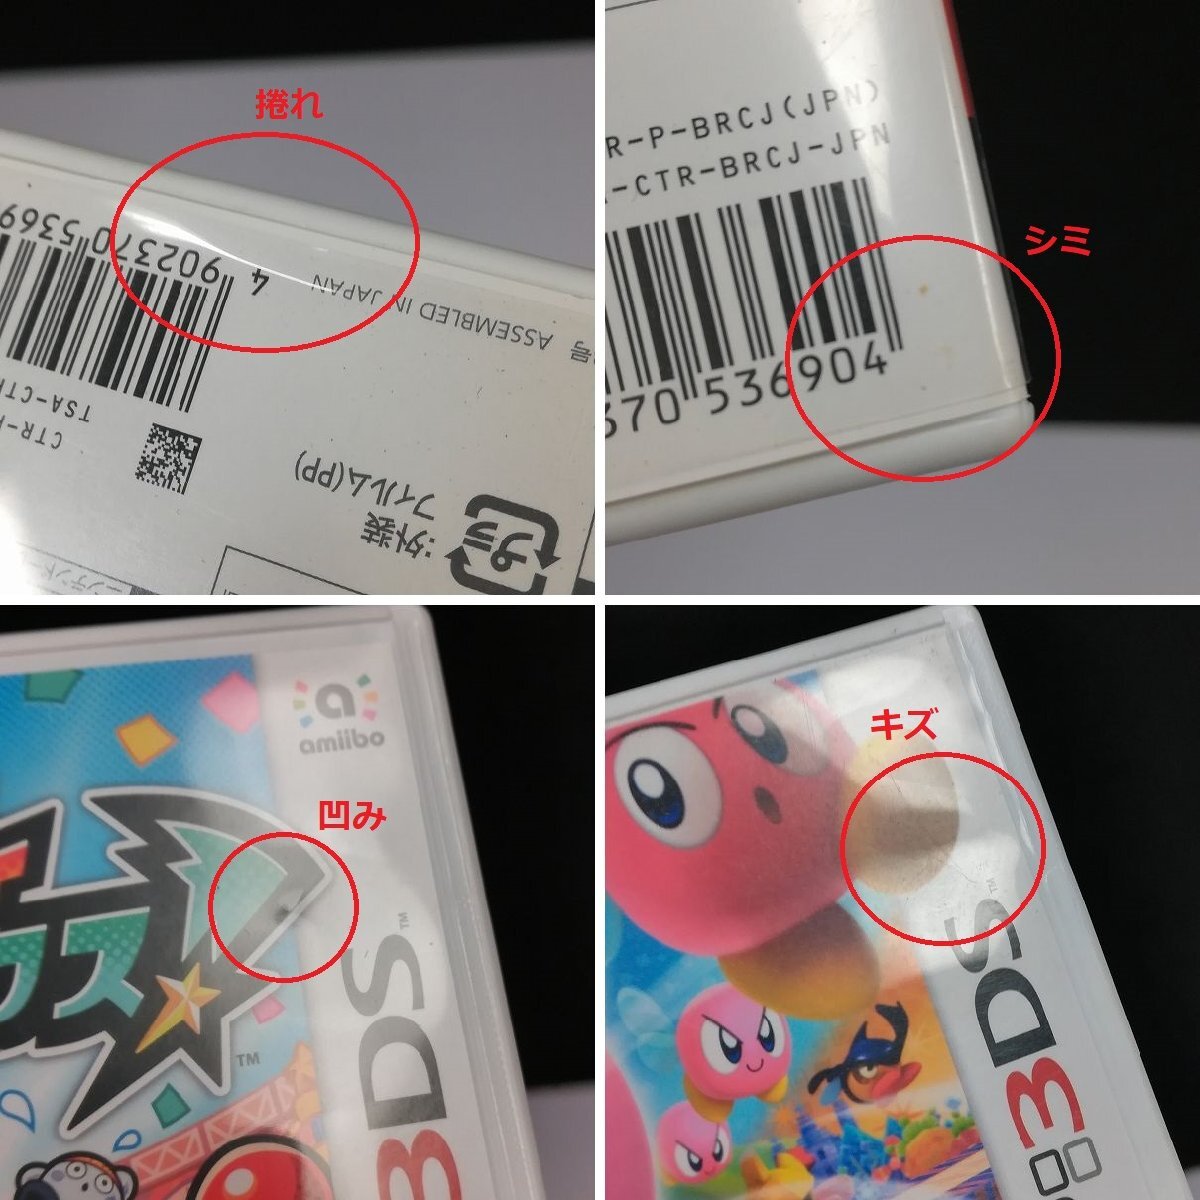 gA604a [ summarize ] 3DS Hey!pikmin star. car bi. Triple Deluxe Battle Deluxe Animal Crossing total 4 point | game Z